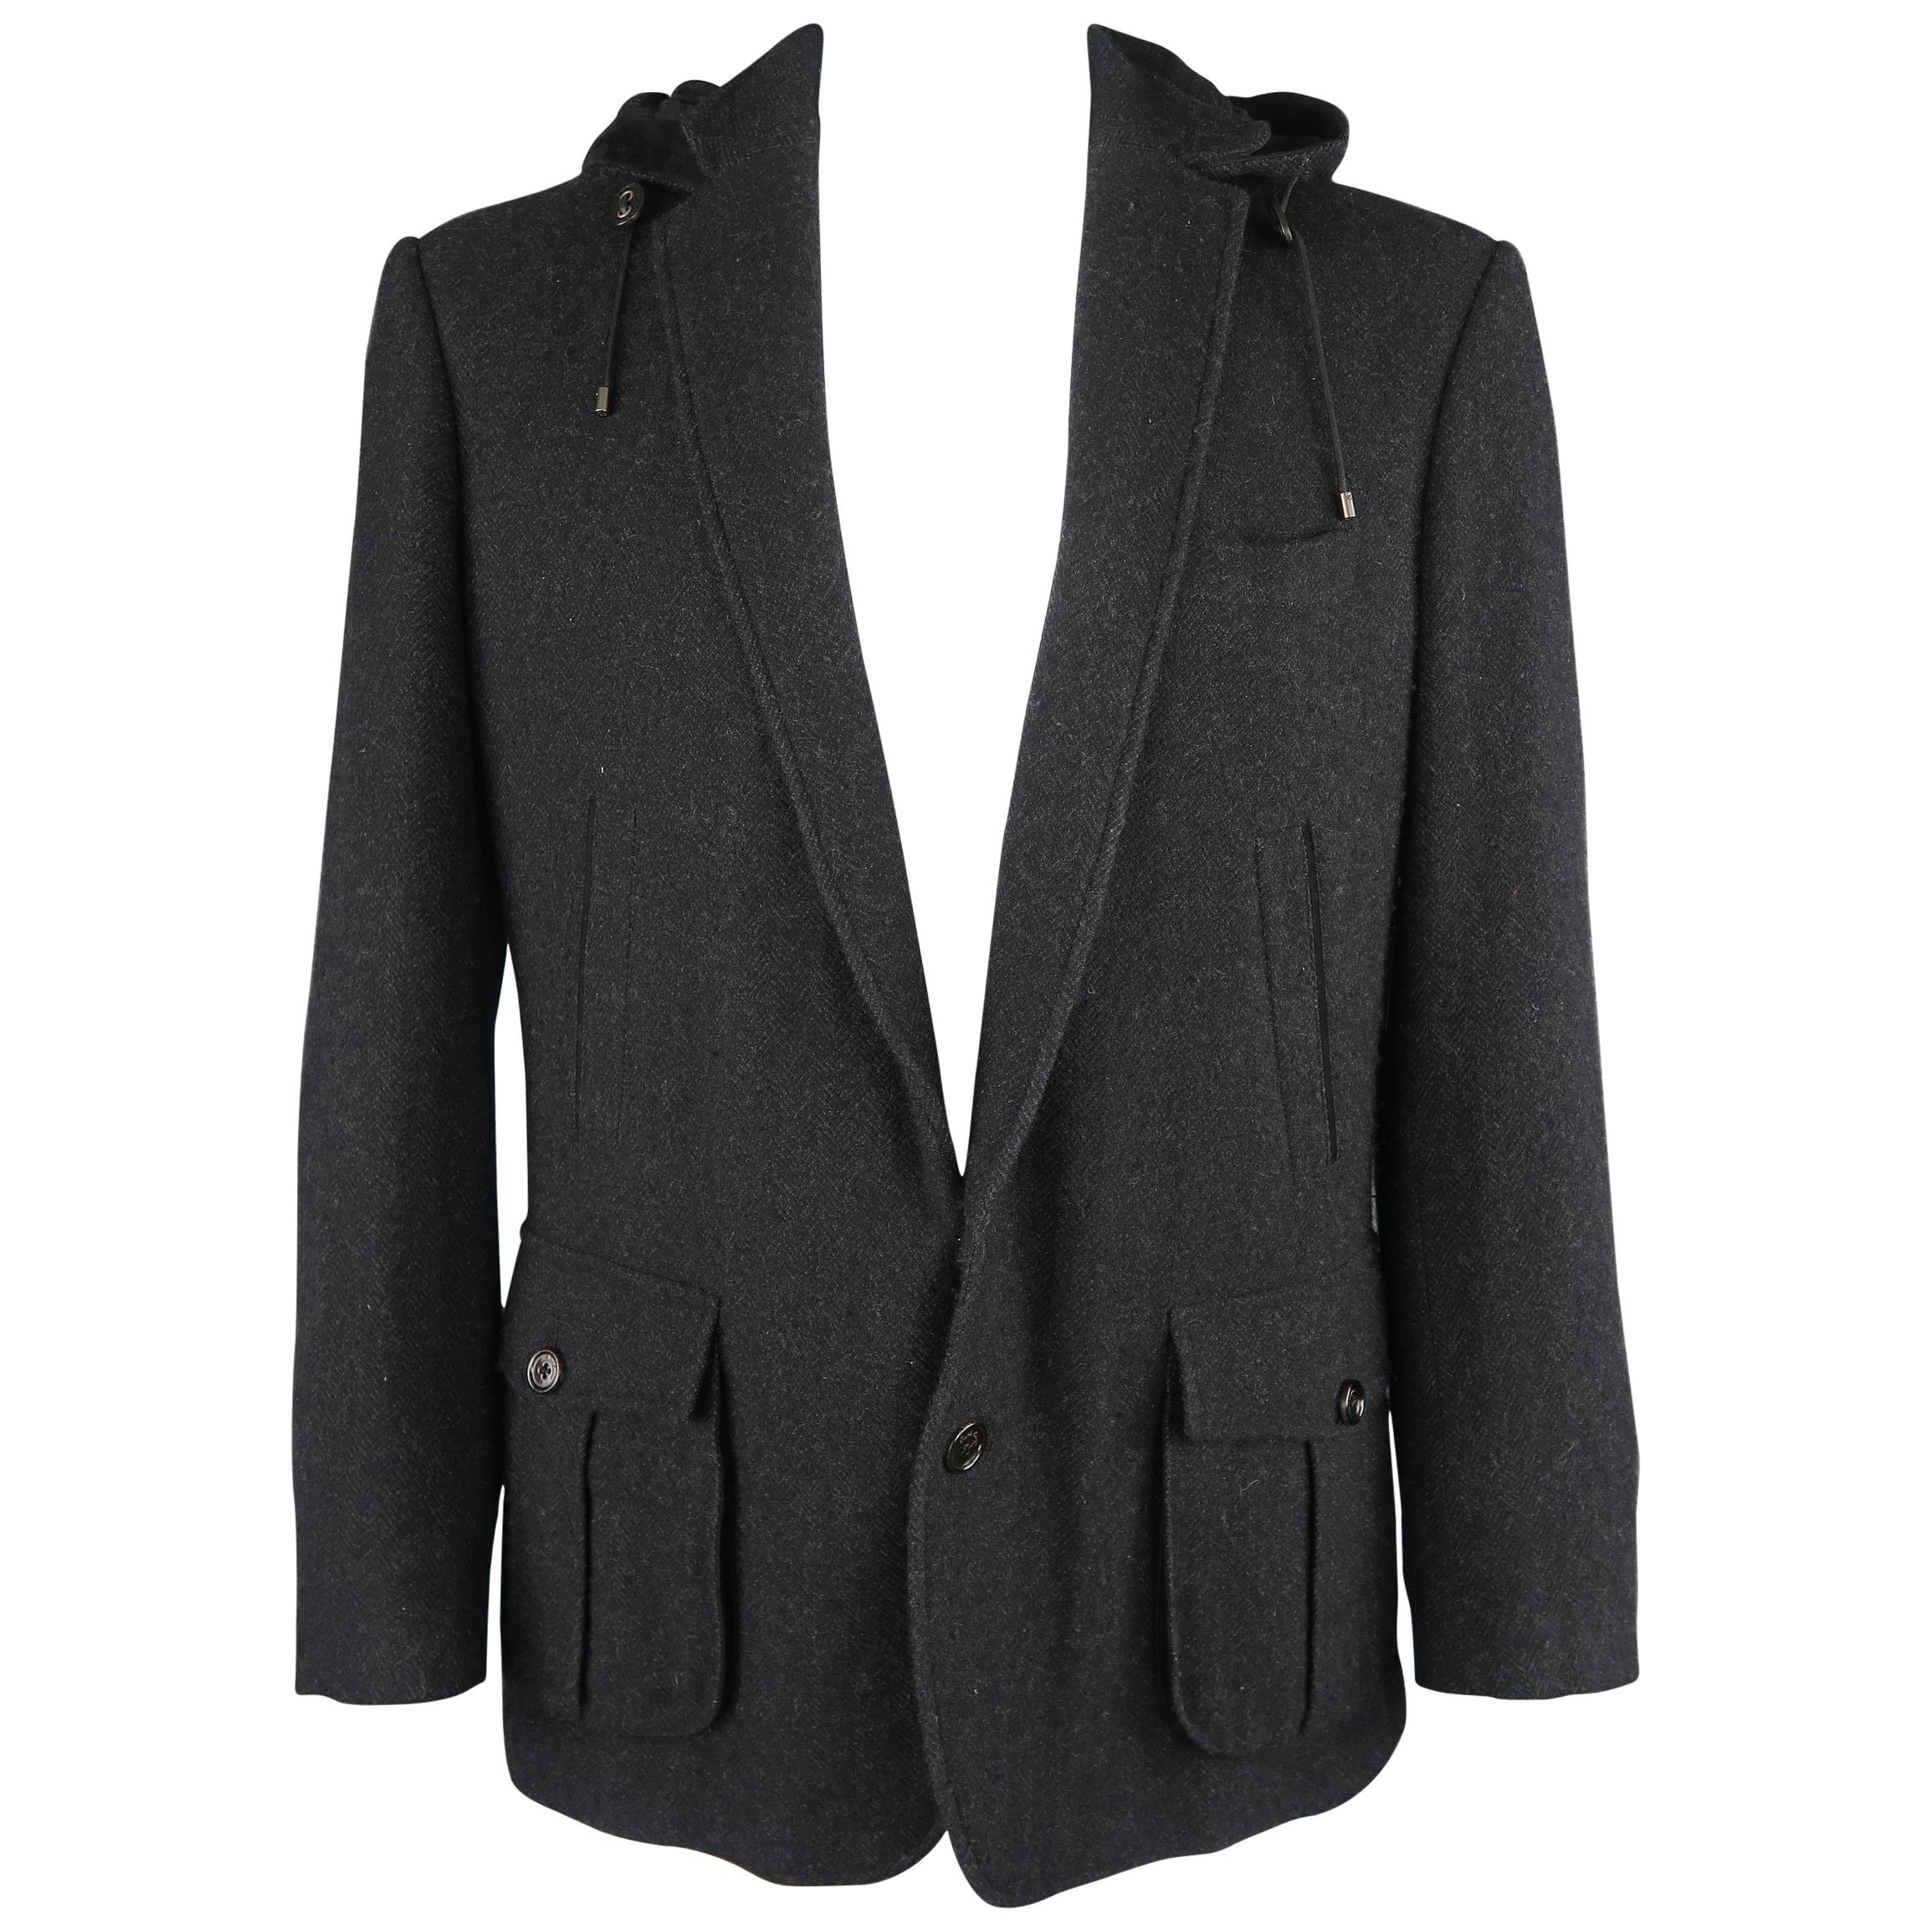 Ralph Lauren Black Herringbone Cashmere Notch Lapel Hooded Sport Coat Jacket